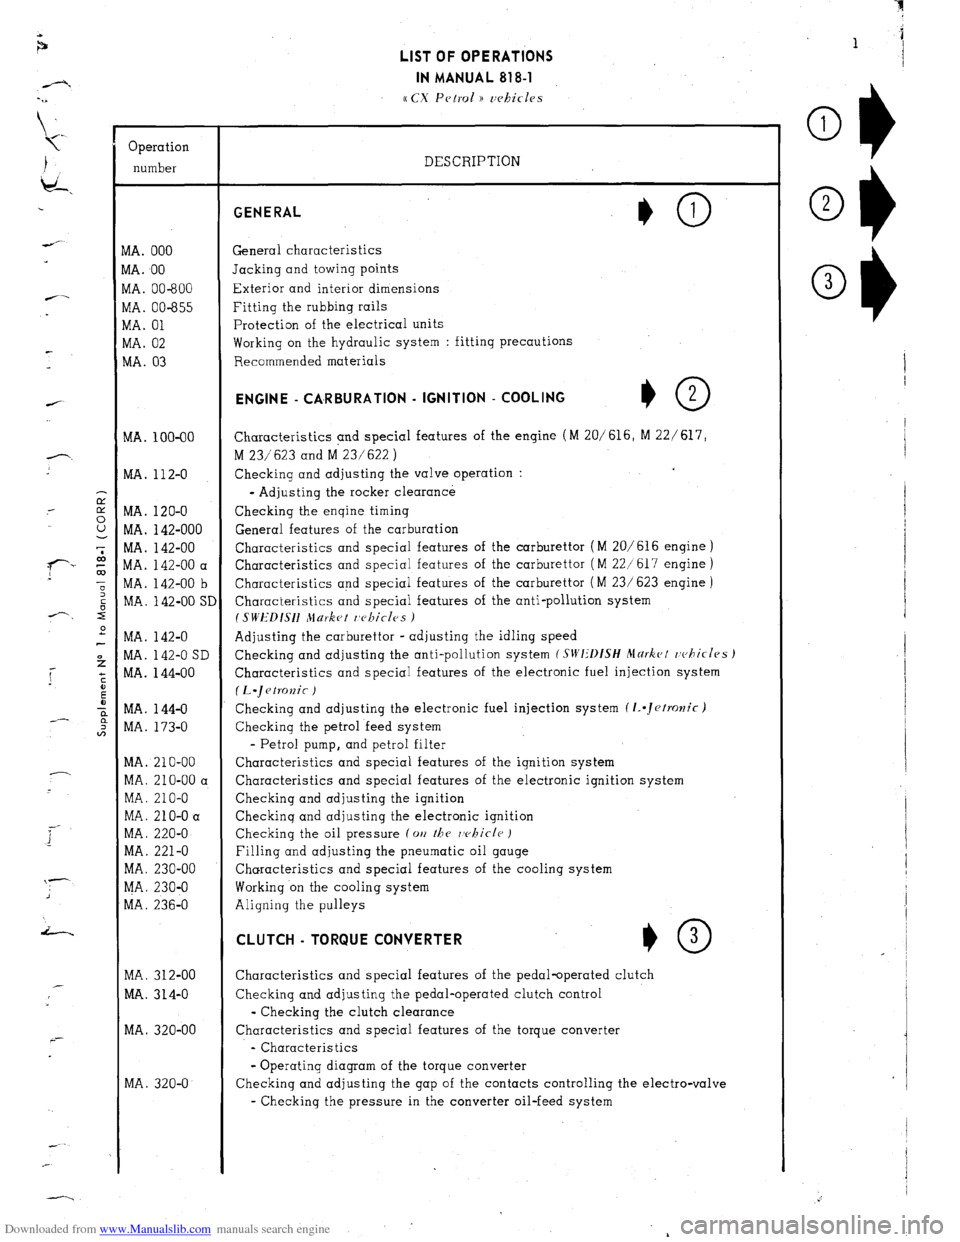 Citroen CX 1983 1.G Workshop Manual Downloaded from www.Manualslib.com manuals search engine Operation 
number 
VIA. 000 
VIA. 00 
VIA. 00-600 
vlA. 00-655 
VIA. 01 
WA. 02 
MA. 03 
MA. 100-00 
MA. 112-O 
MA. 120-O 
MA. 142-000 
MA. 142